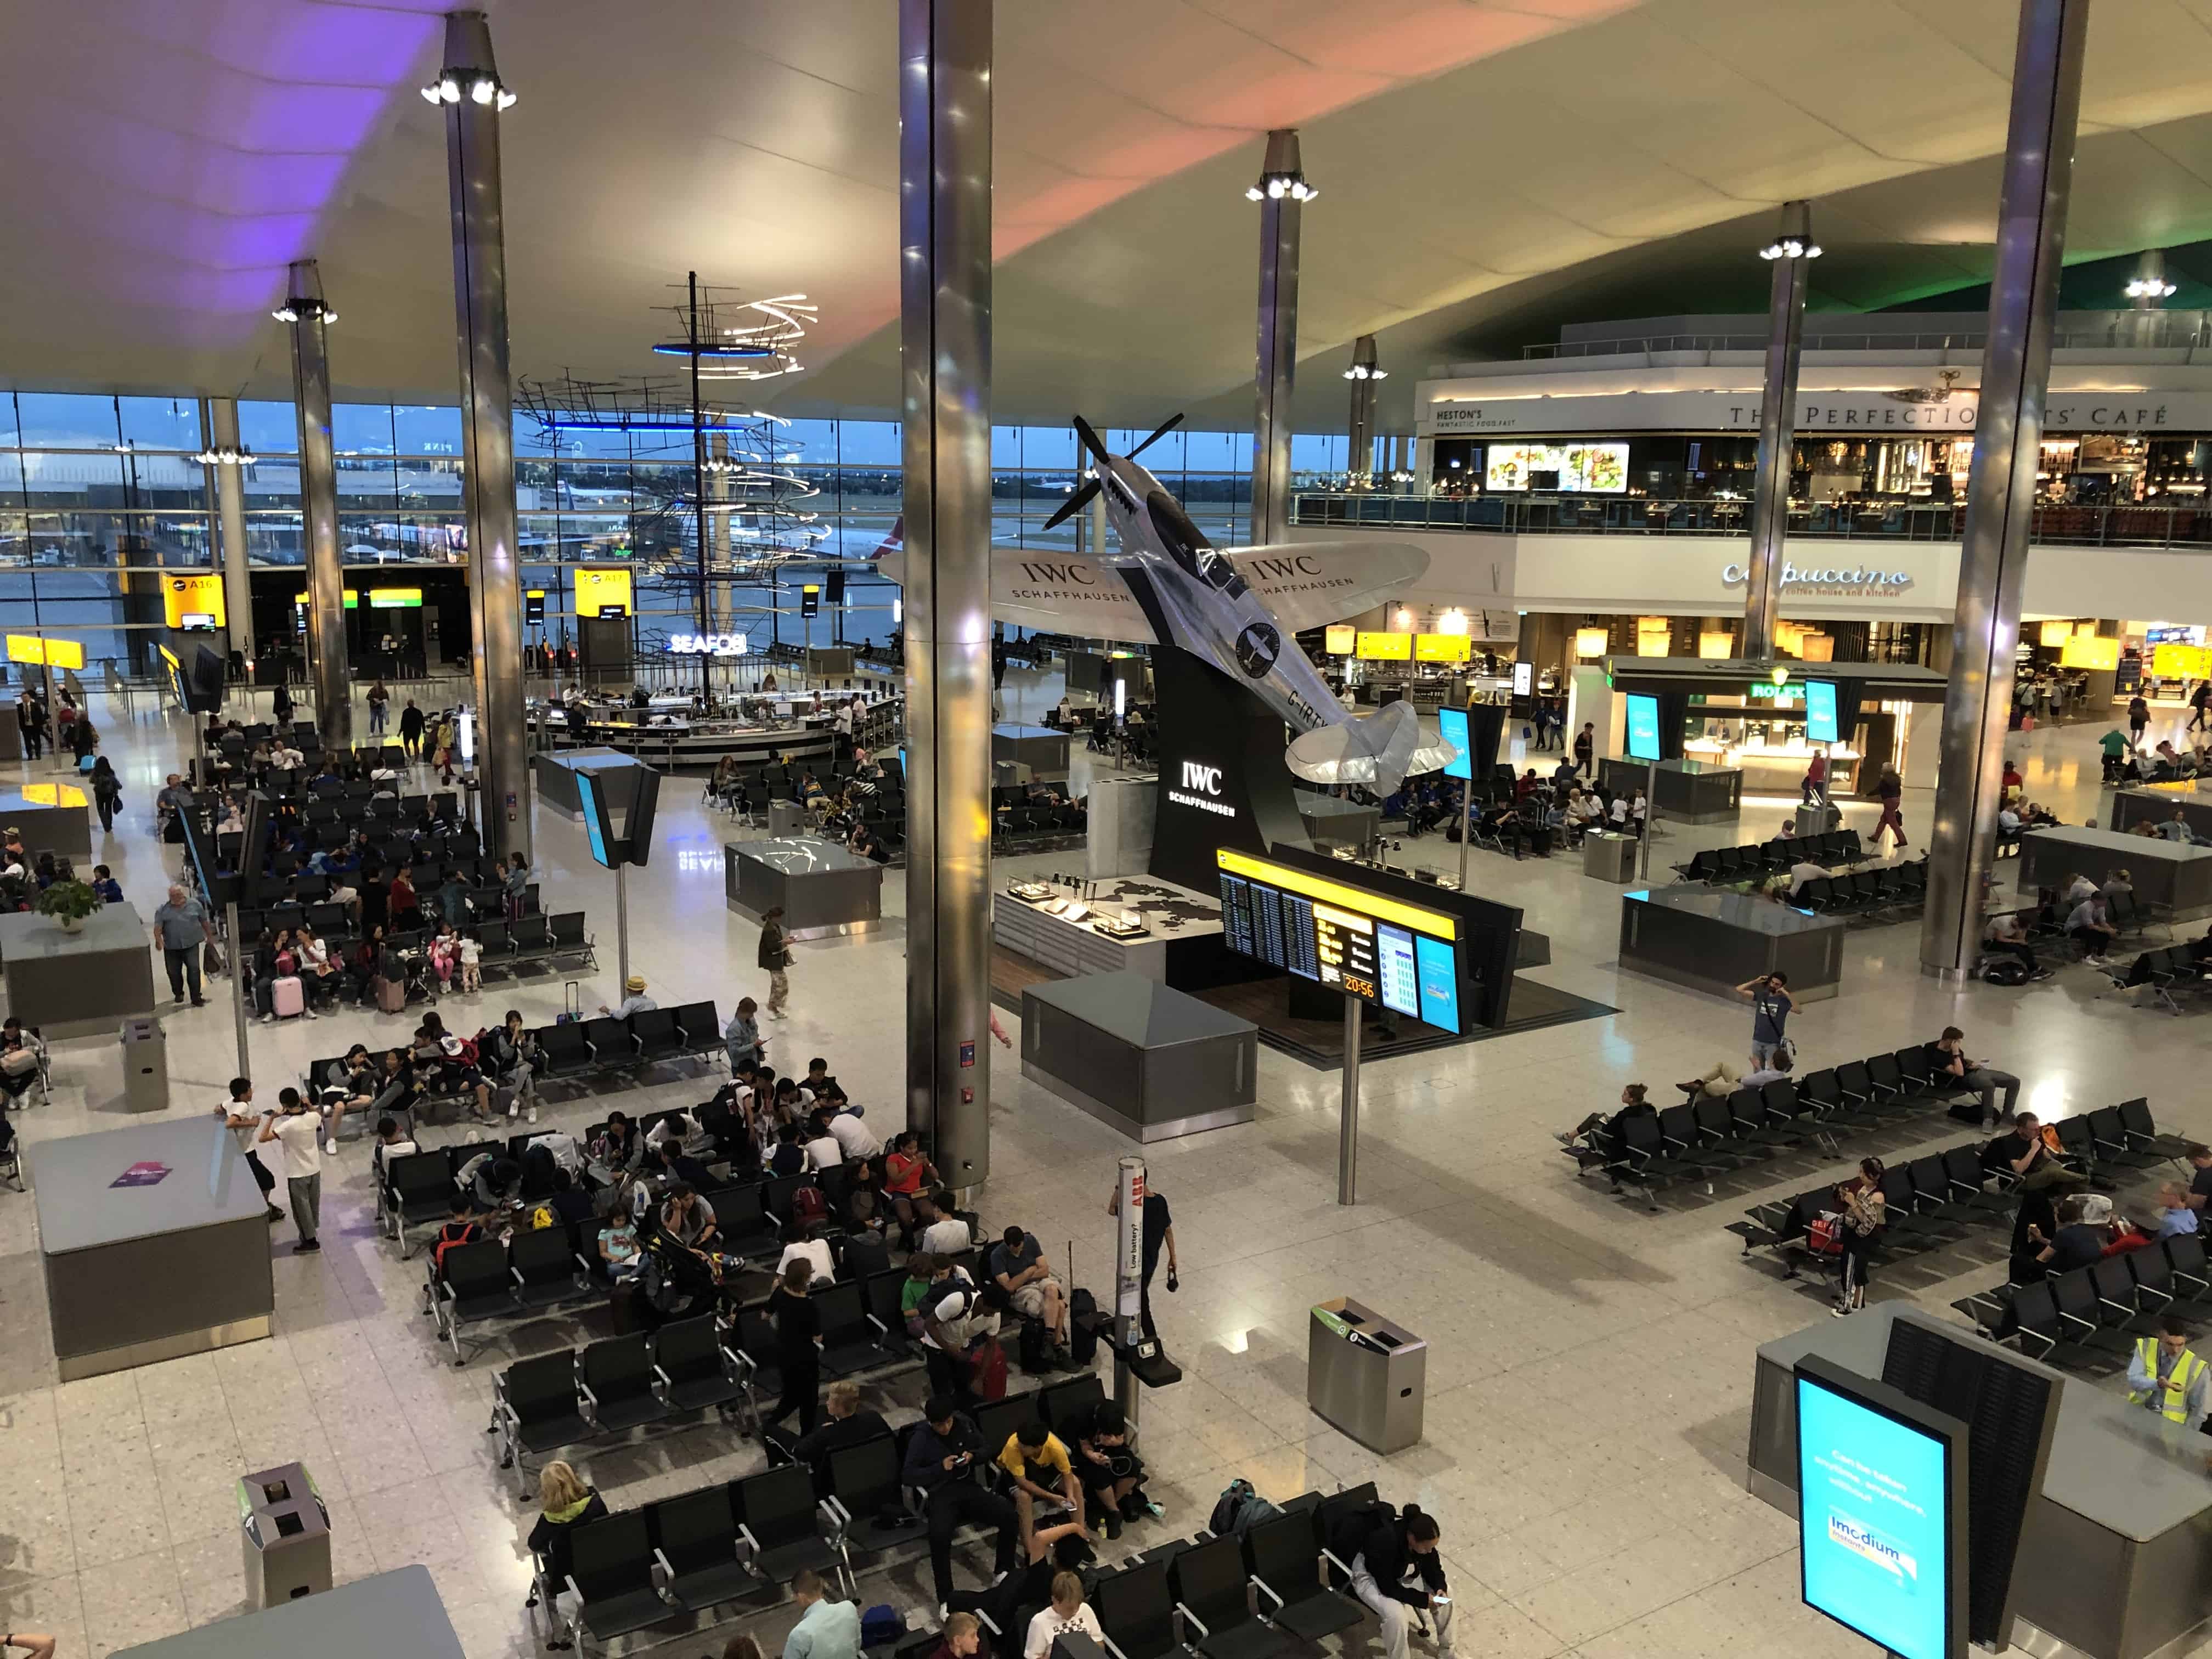 Heathrow Airport Terminal 2 in London, England